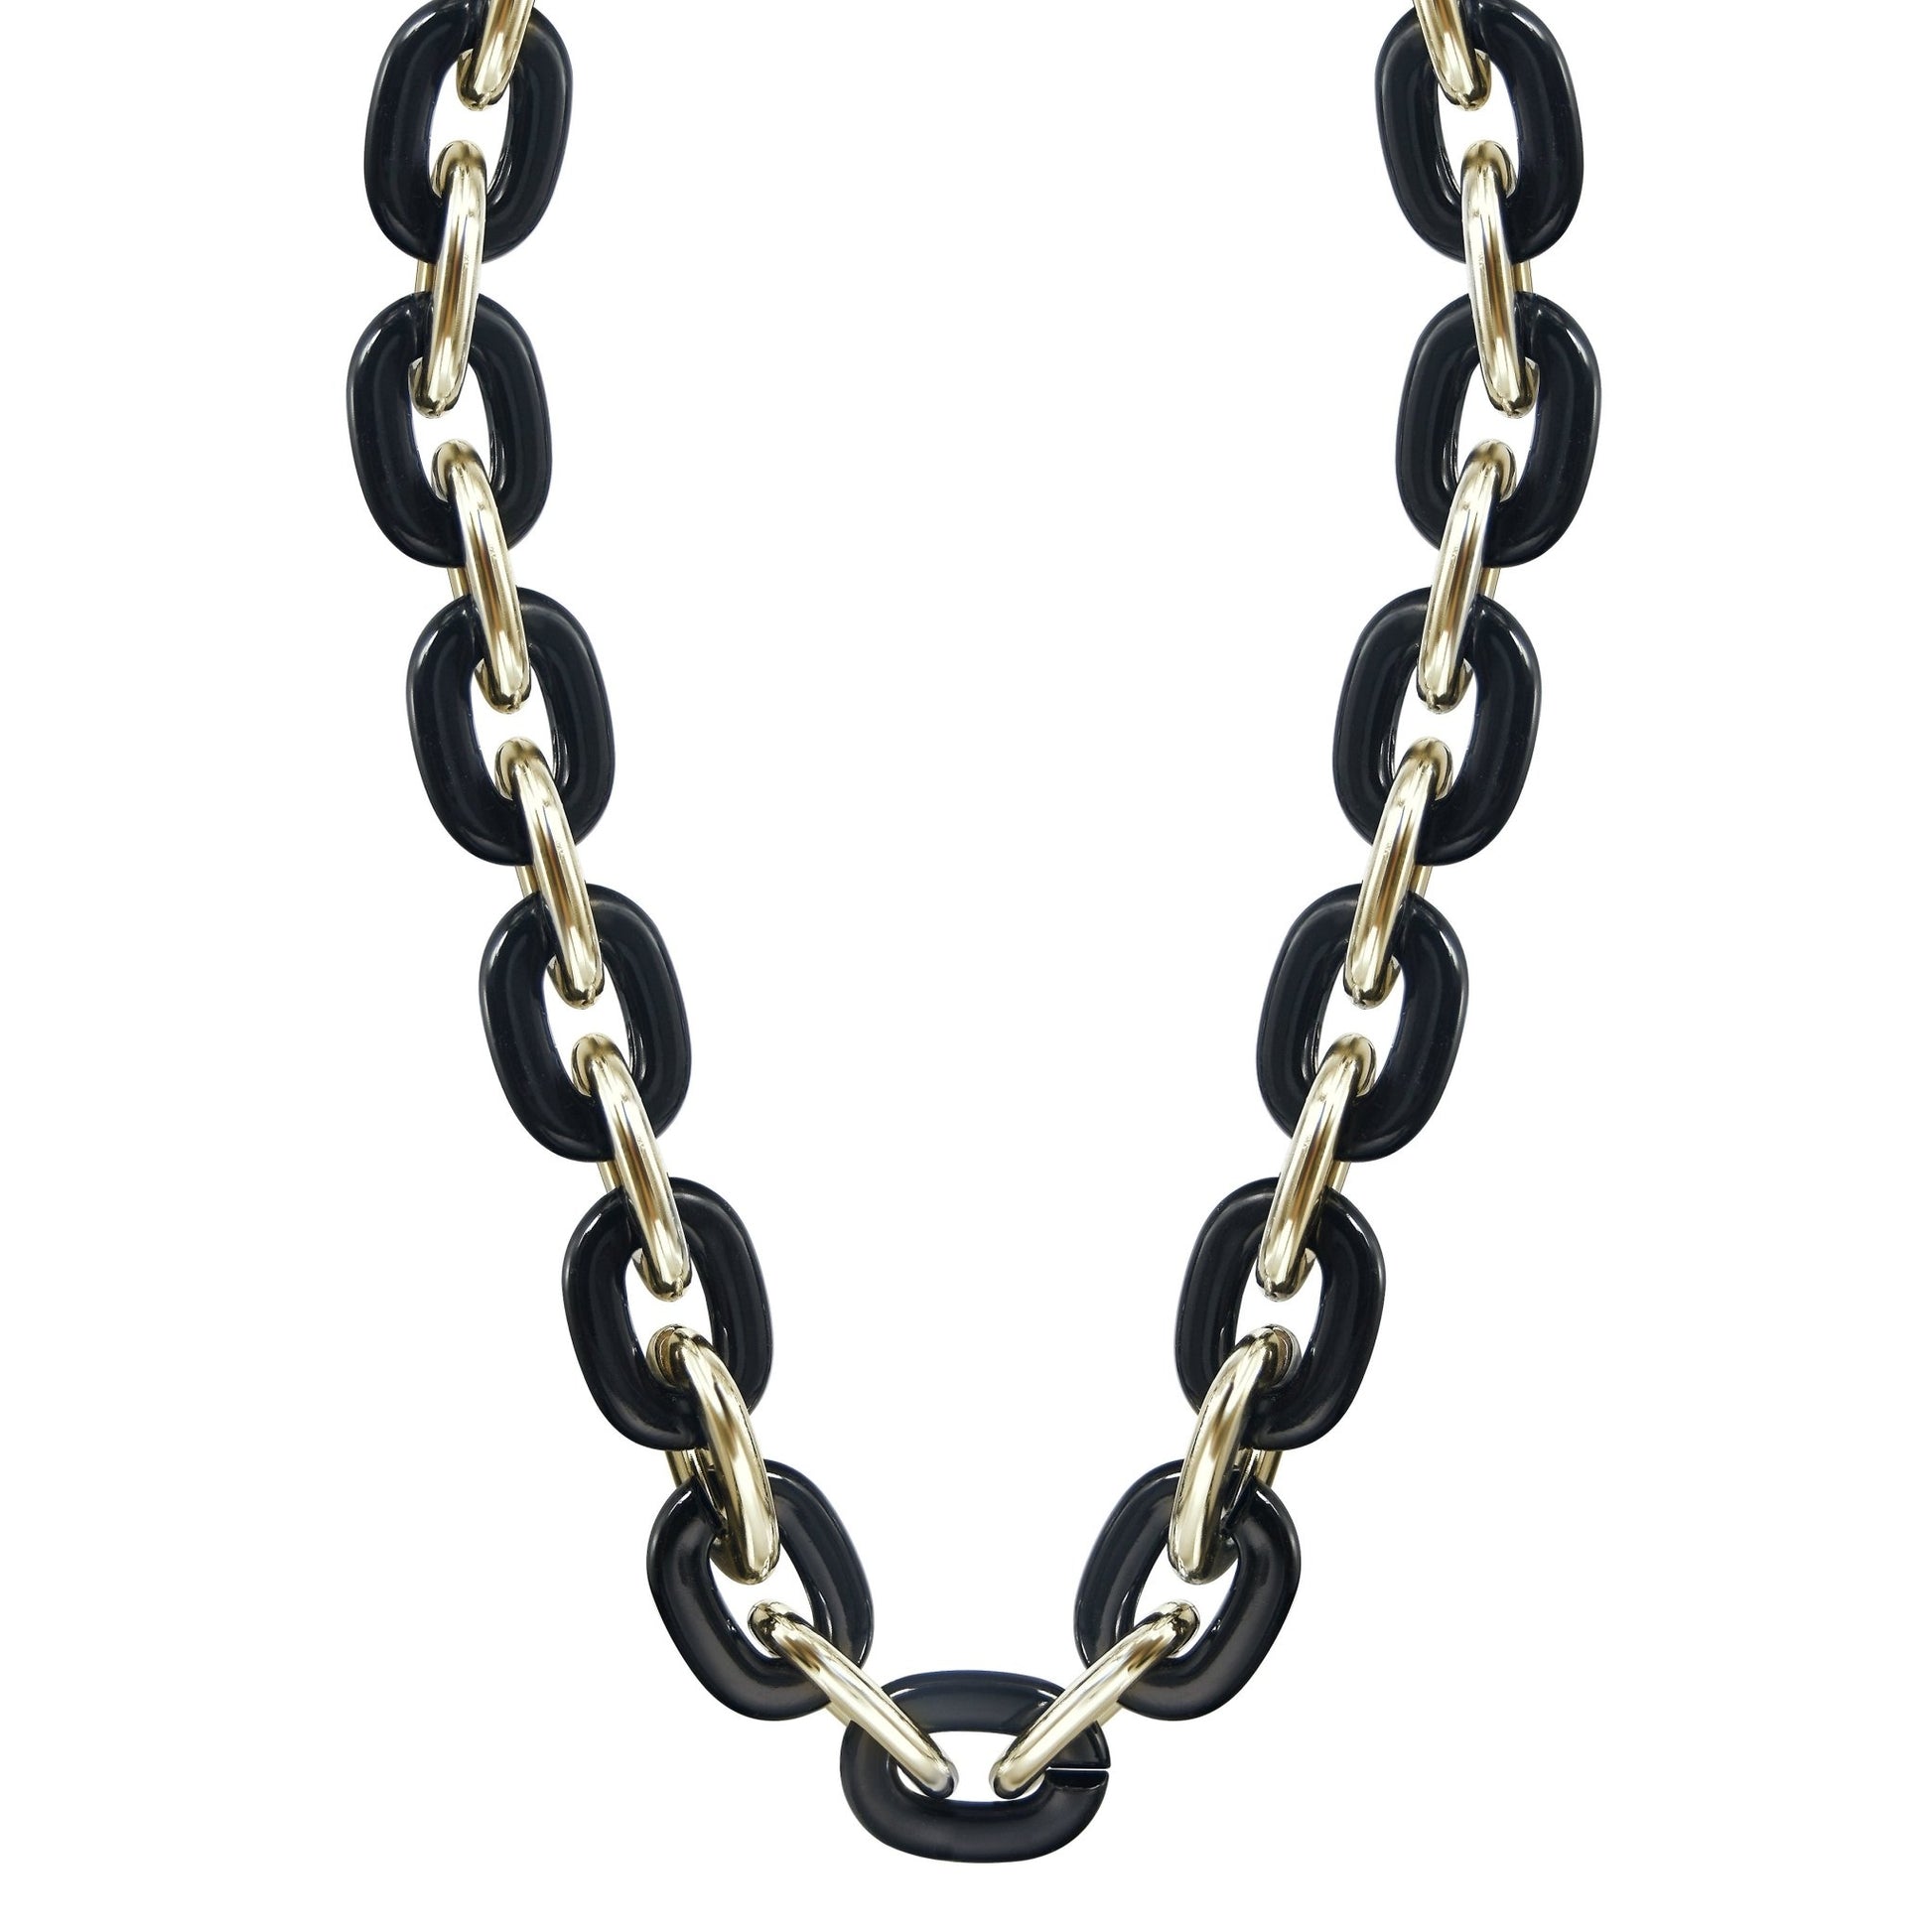 Jumbo Fan Chain Necklace - Gamedays Gear - Black / Light Gold